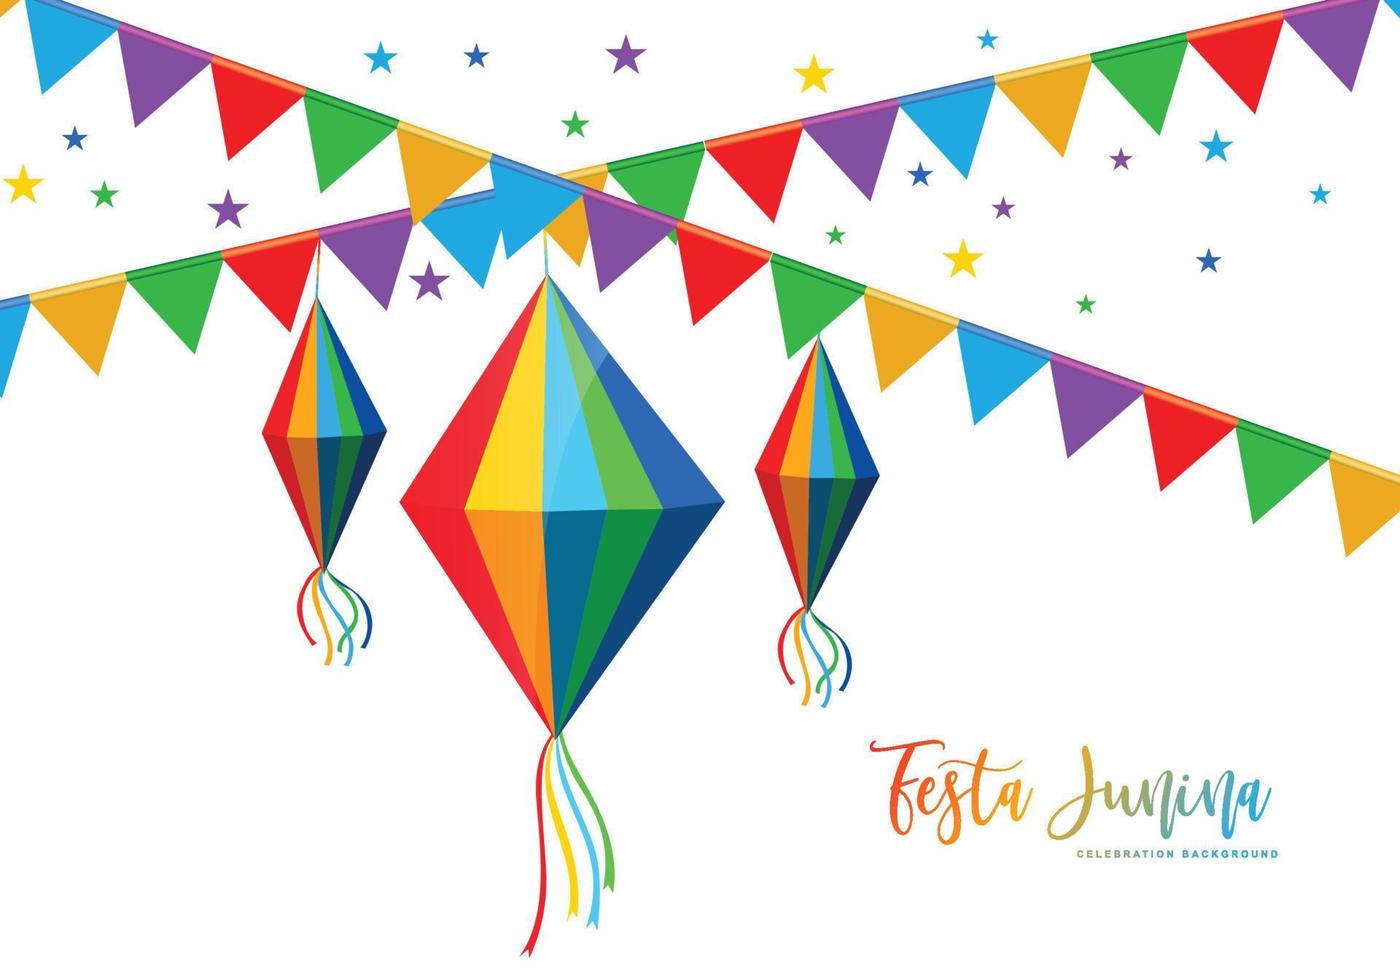 Festa junina decorative celebration card background vector